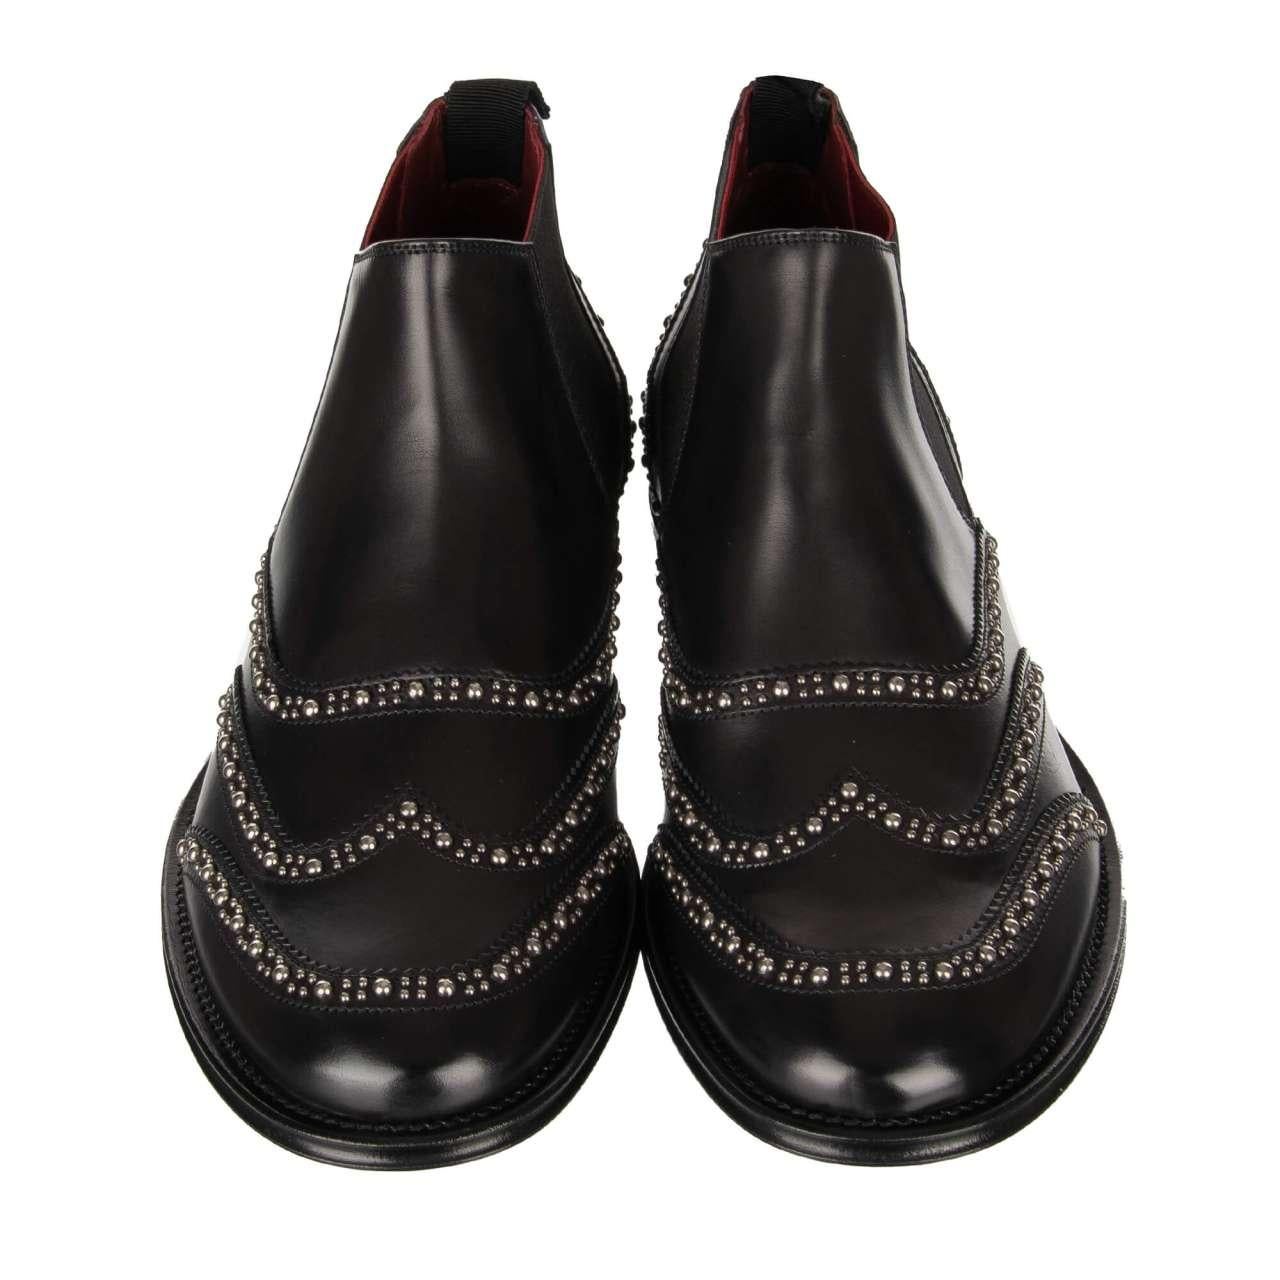 Men's Dolce & Gabbana Studded Leather Ankle Boots Shoes MARSALA Black EUR 41.5 For Sale